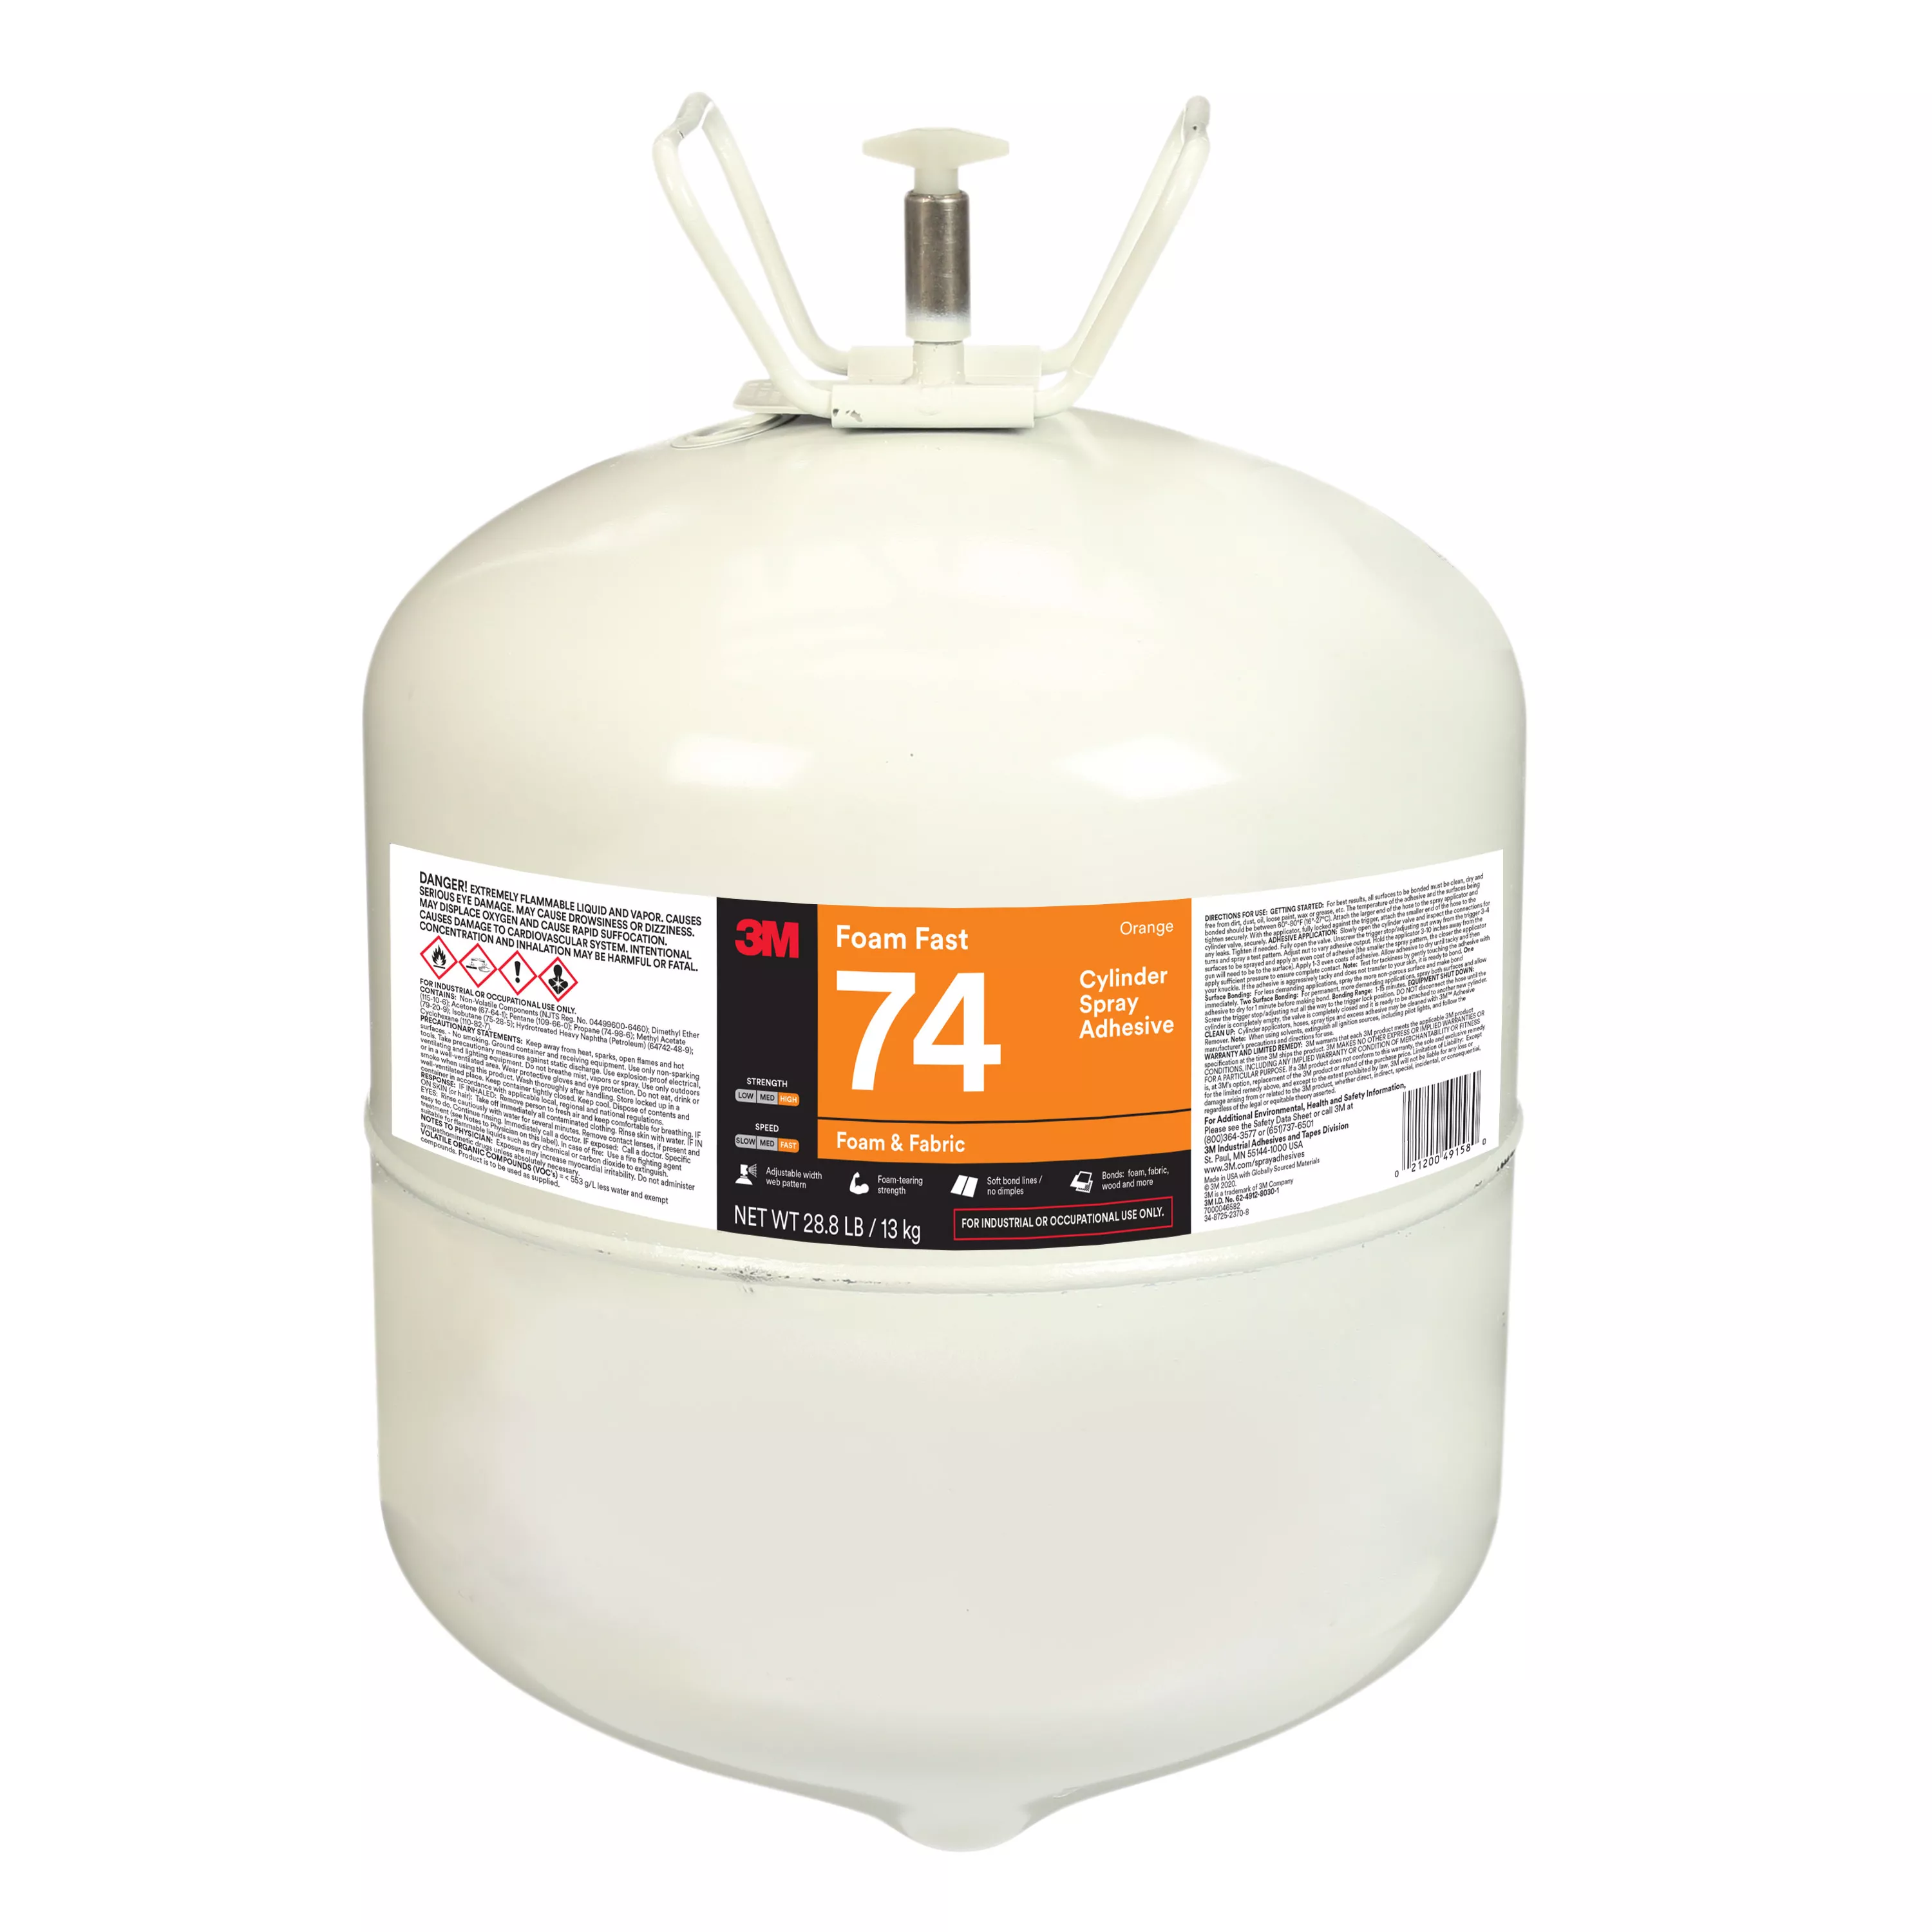 3M™ Foam Fast 74, Cylinder Spray Adhesive, Orange, Large Cylinder (Net
Wt 28.8 lb), 1 Each/Case